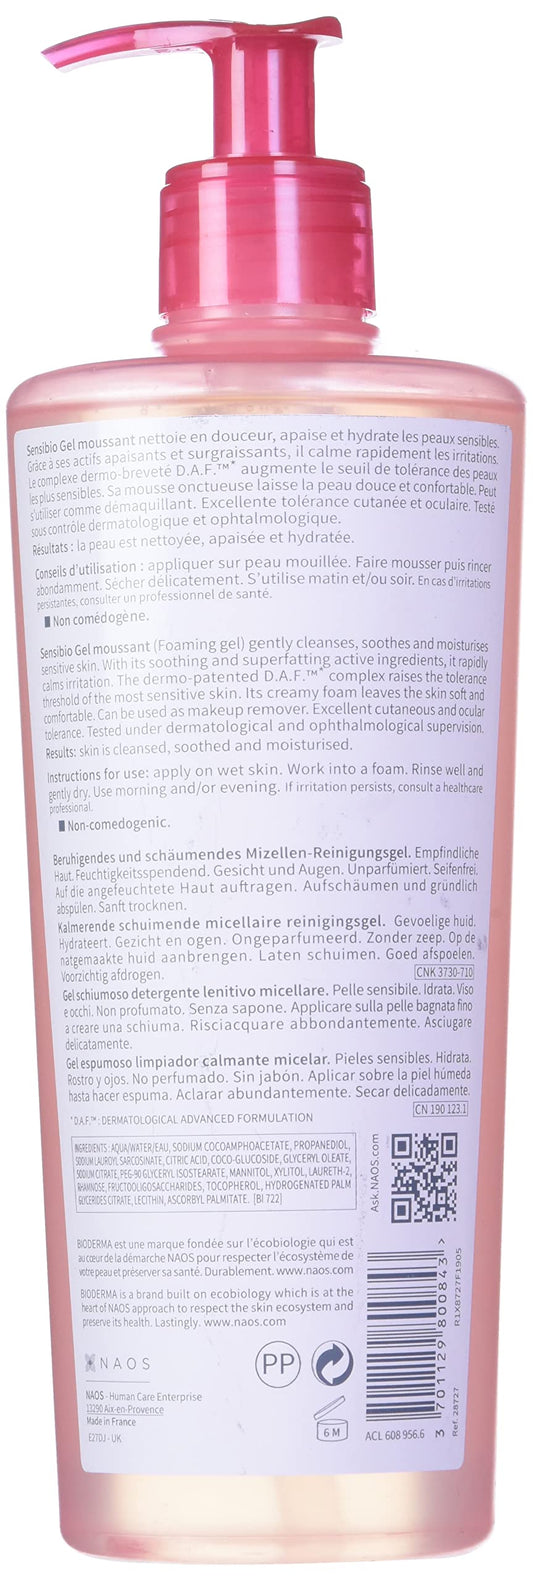 Bioderma Sensibio Foaming Gel Cleansing and Make-Up Removing Refreshing feeling for Sensitive Skin Unscented, 16.7 Fl Oz